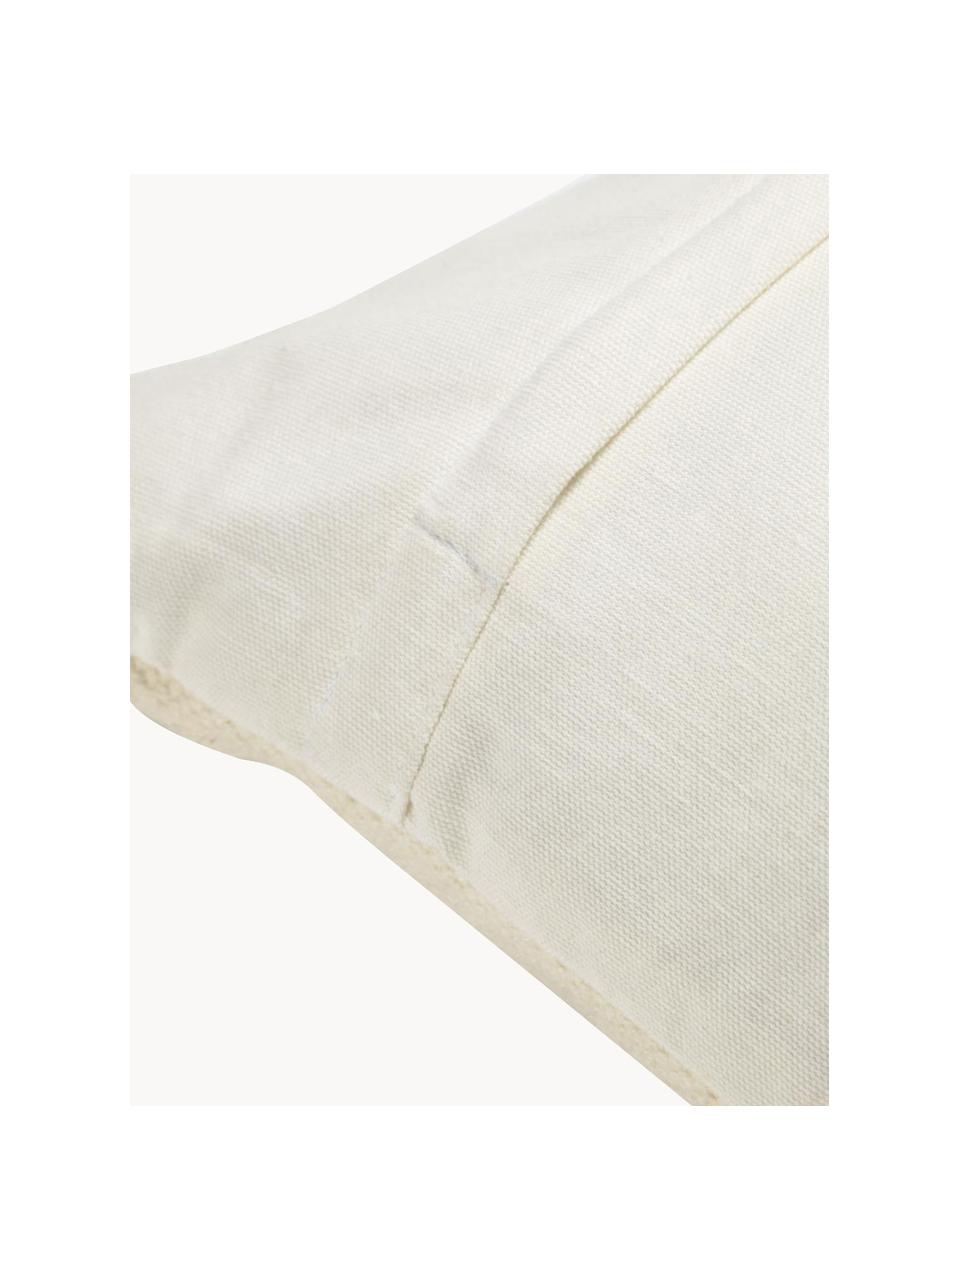 Funda de cojín bordada Tadea, 100% algodón, Blanco crema, muliticolor, An 45 x L 45 cm